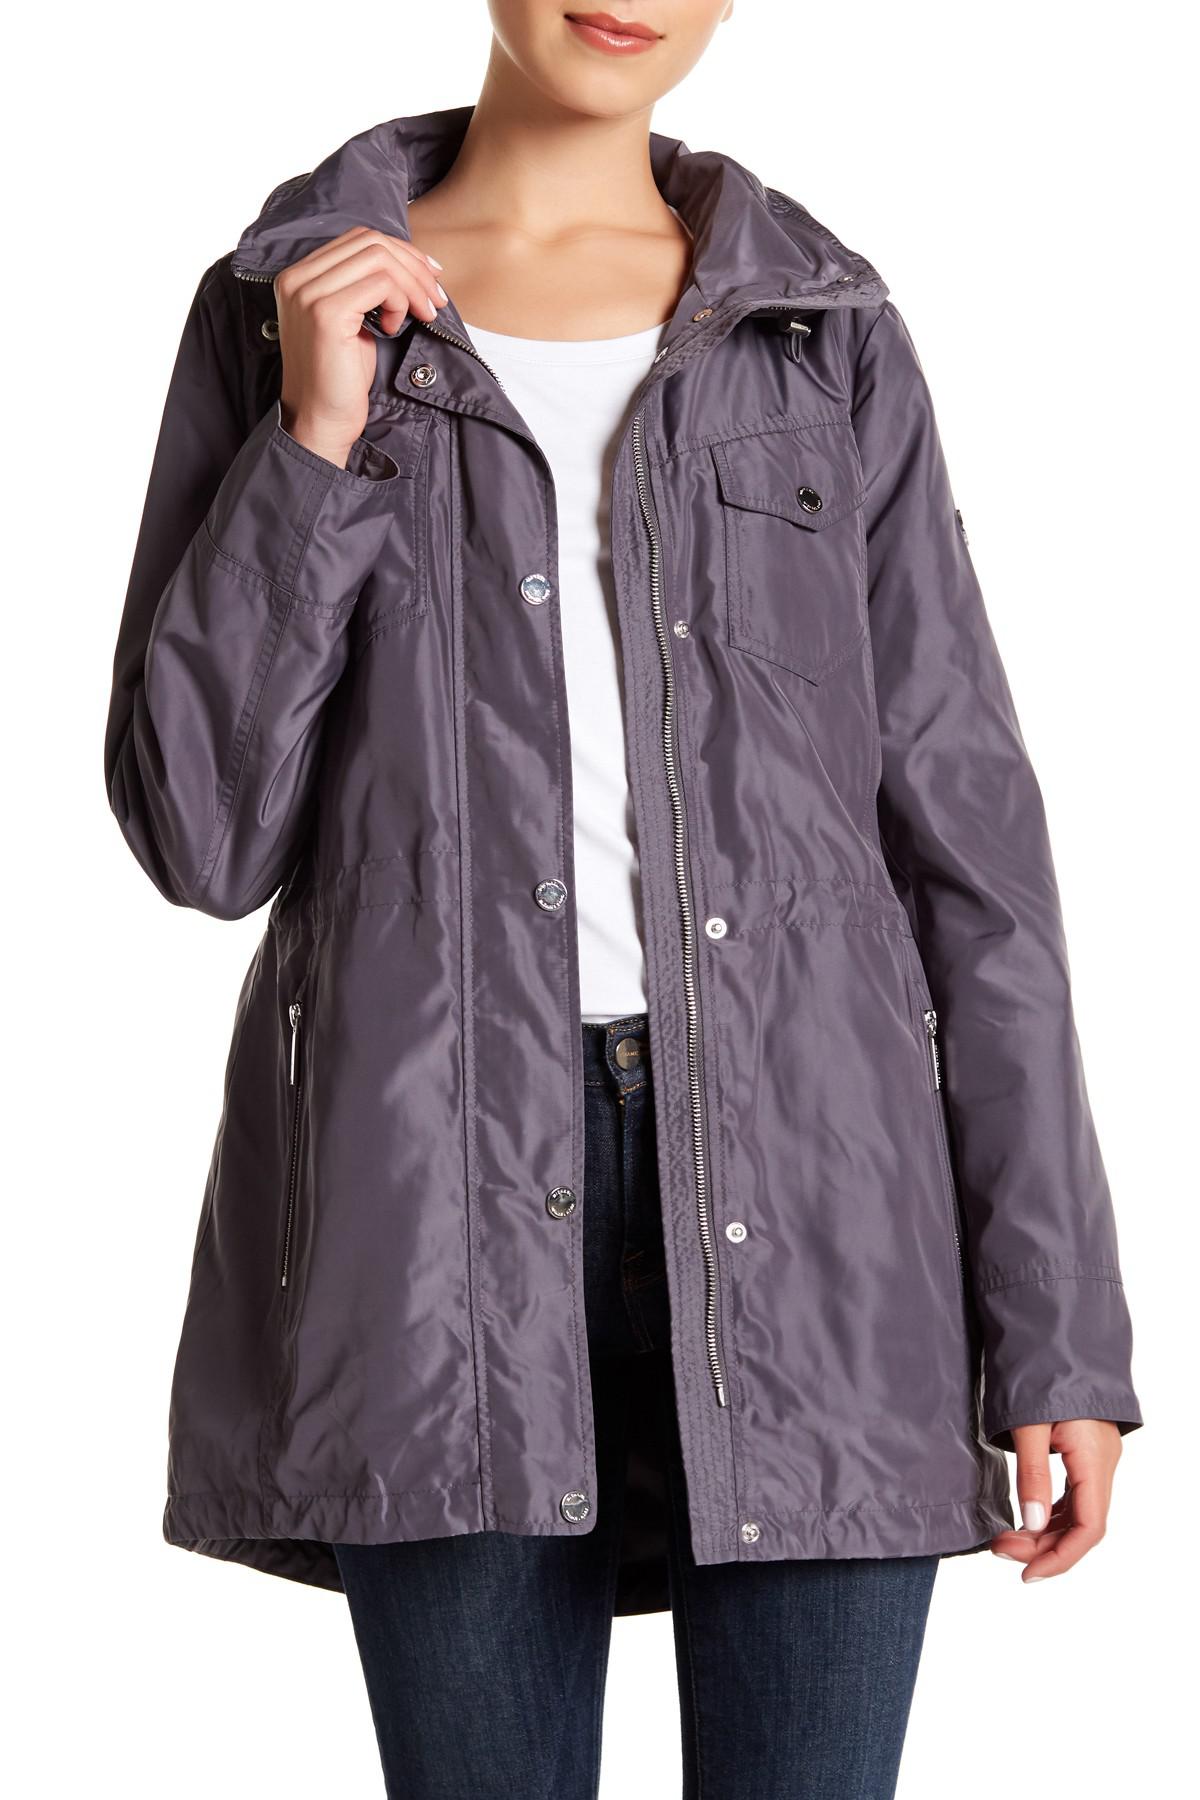 michael kors missy snap & zip front hooded raincoat